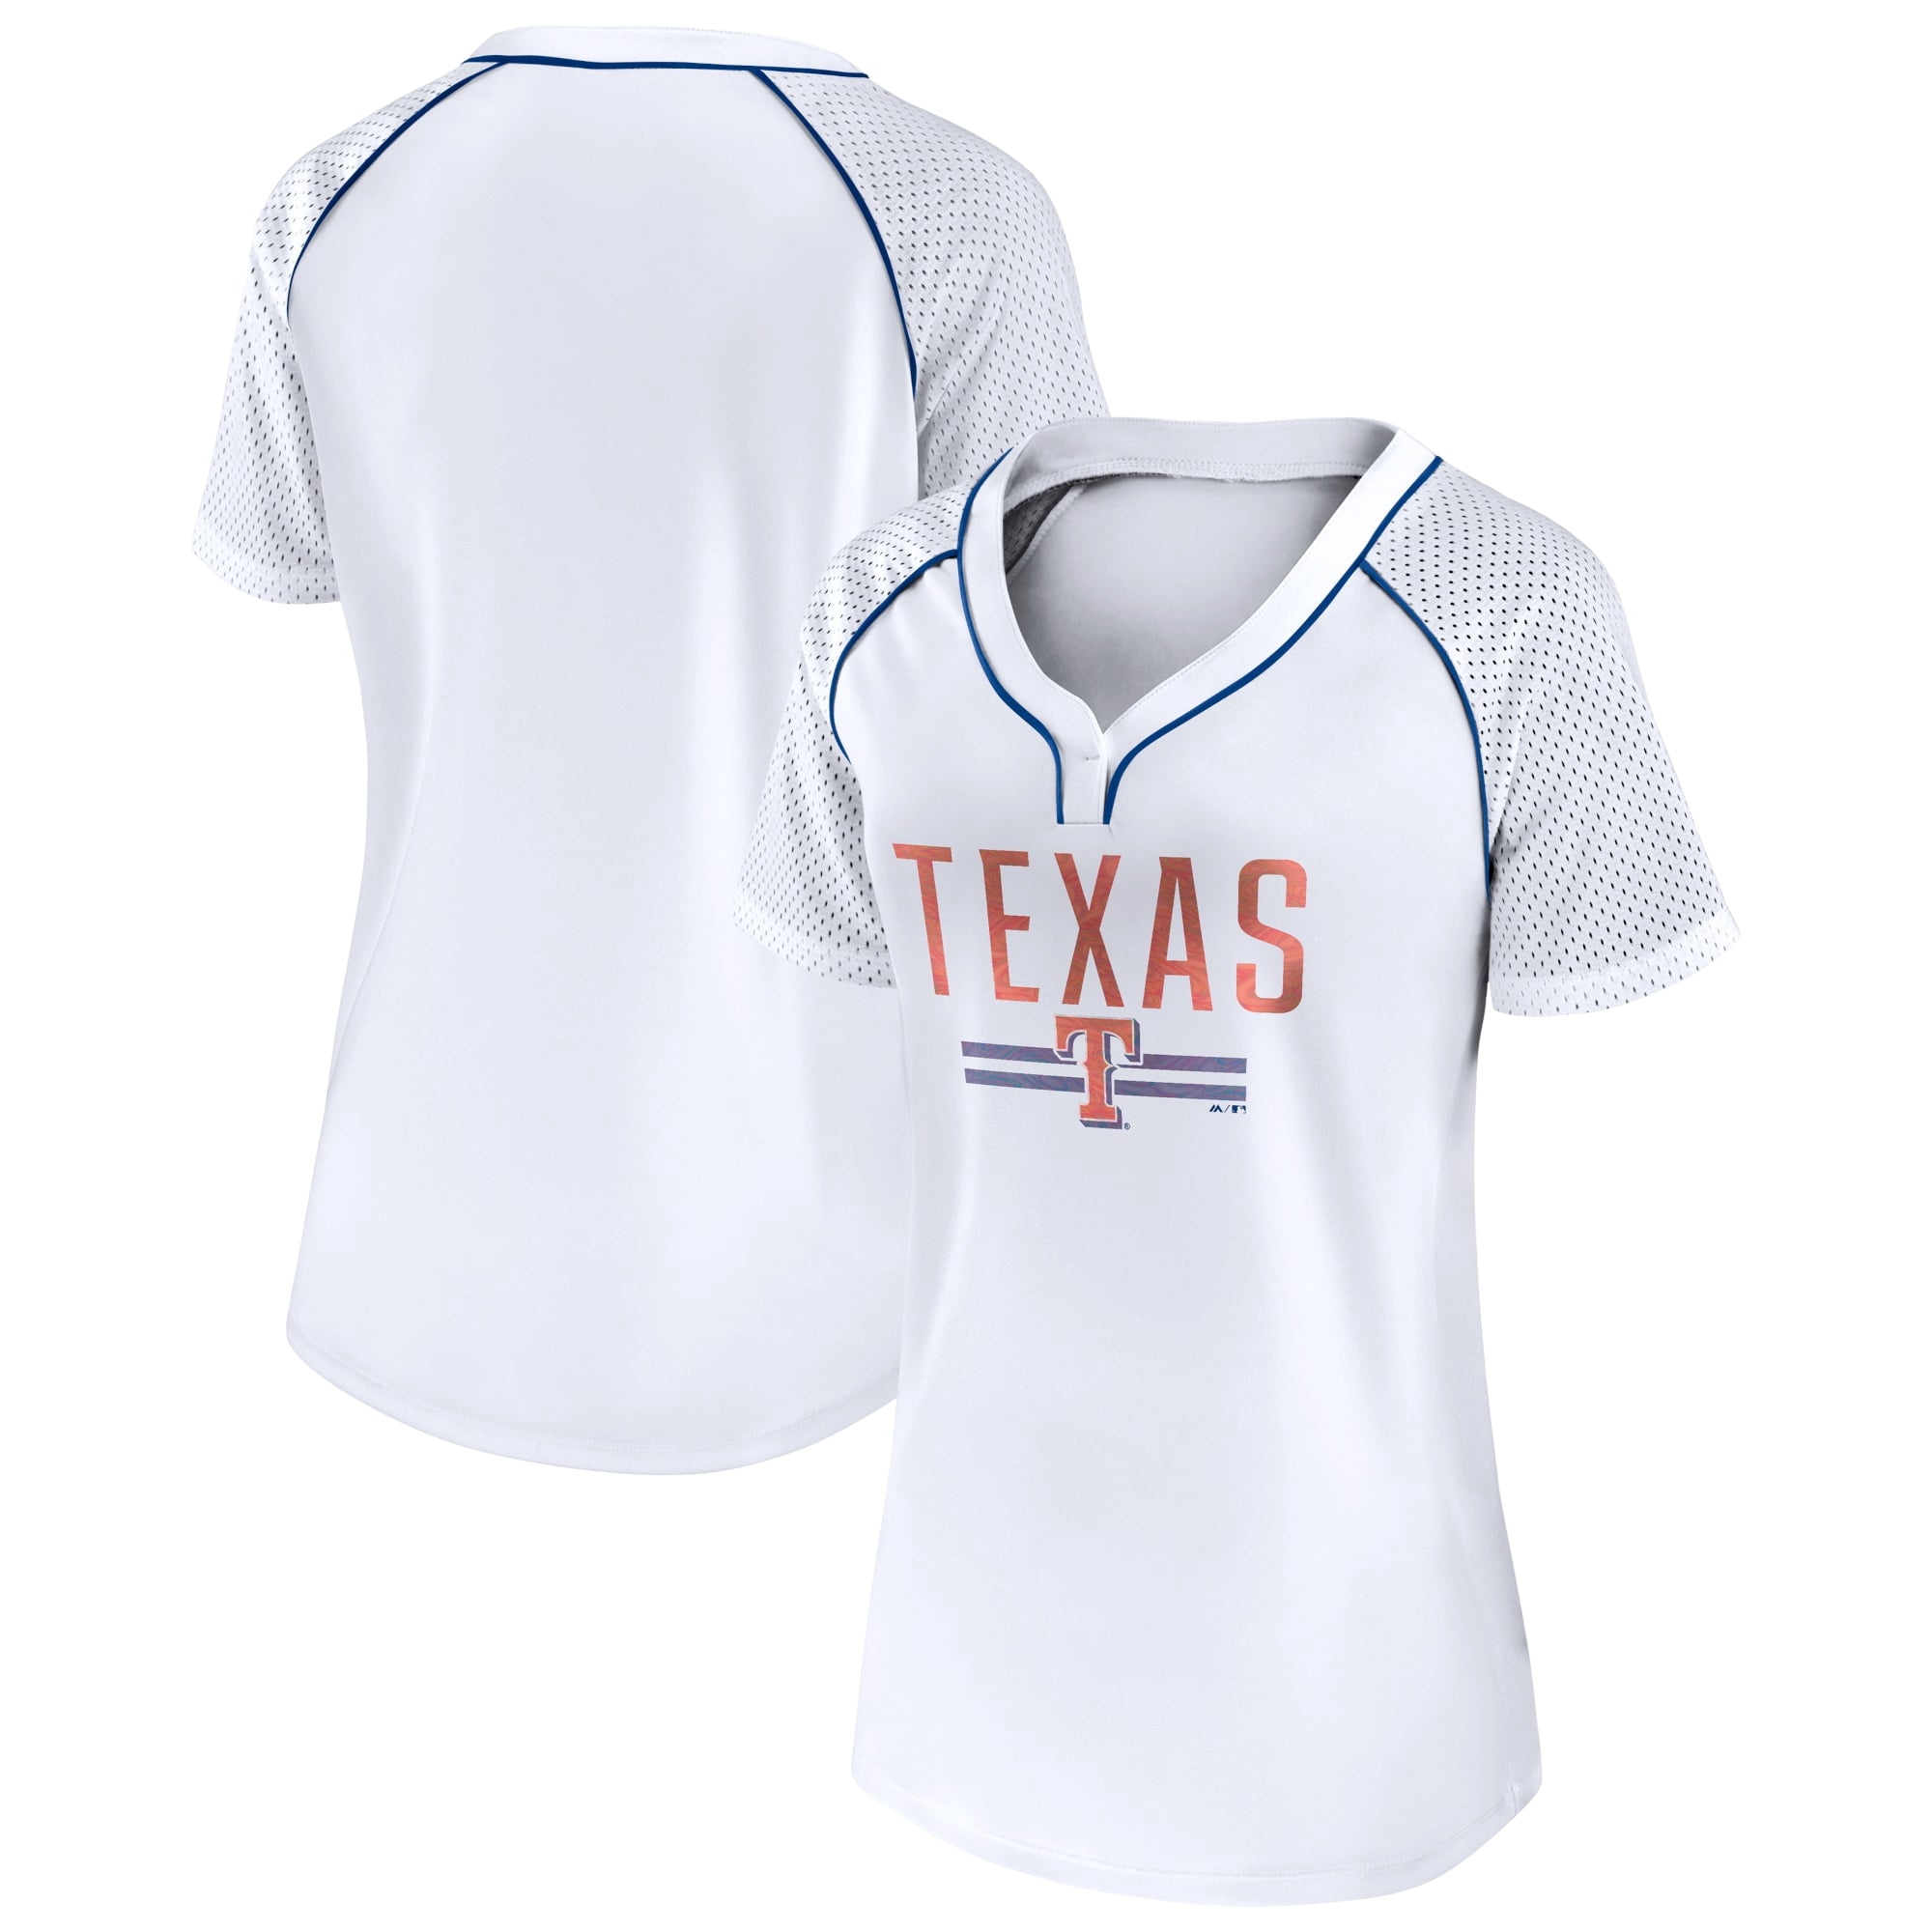 Women's Fanatics Branded White Texas Rangers Play Calling Raglan V